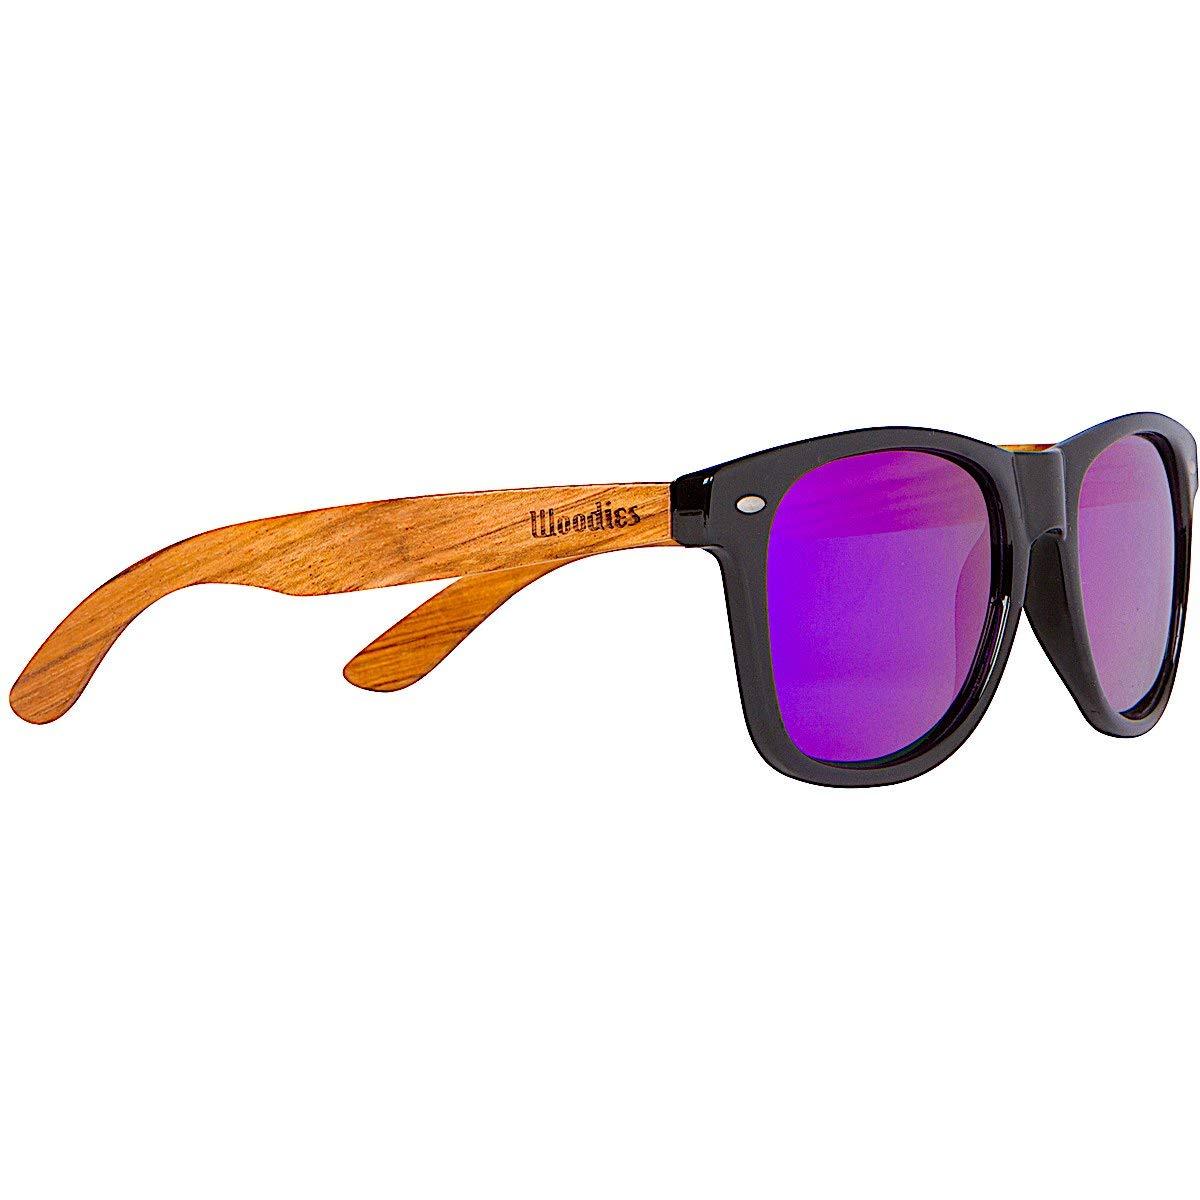 Zebra Wood Sunglasses with Purple Mirror Polarized Lens - $62.50